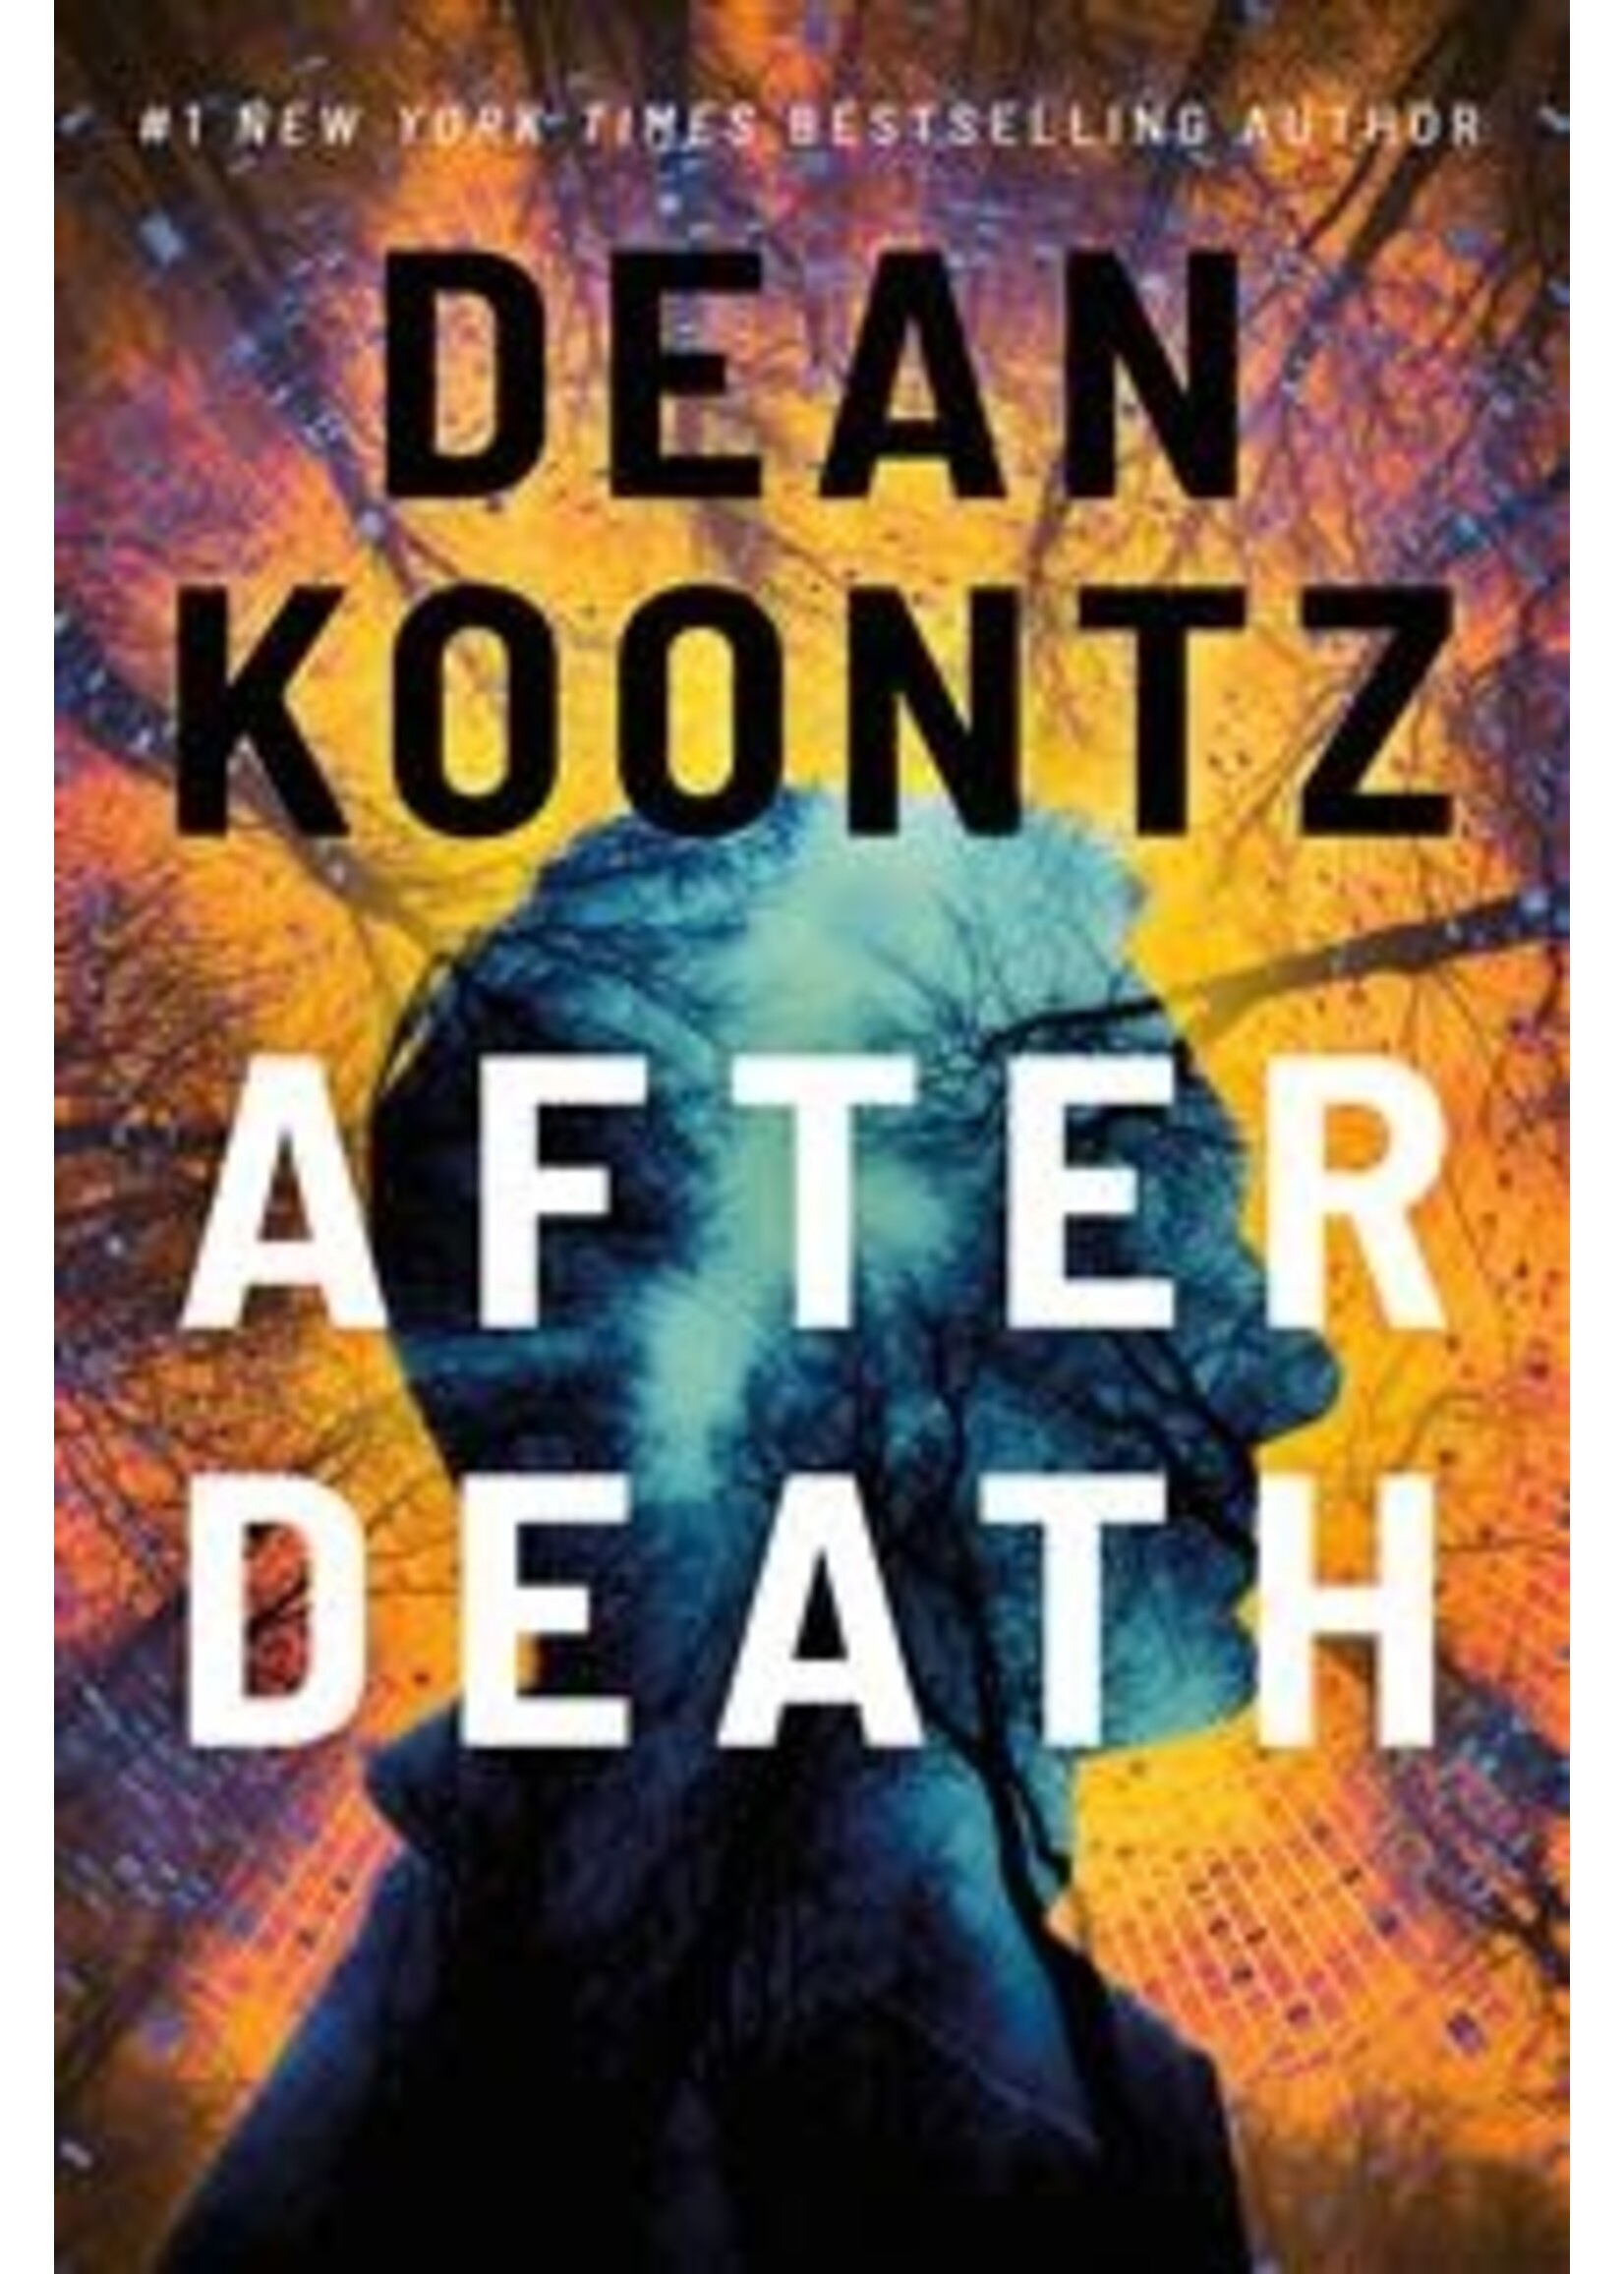 After Death by Dean Koontz